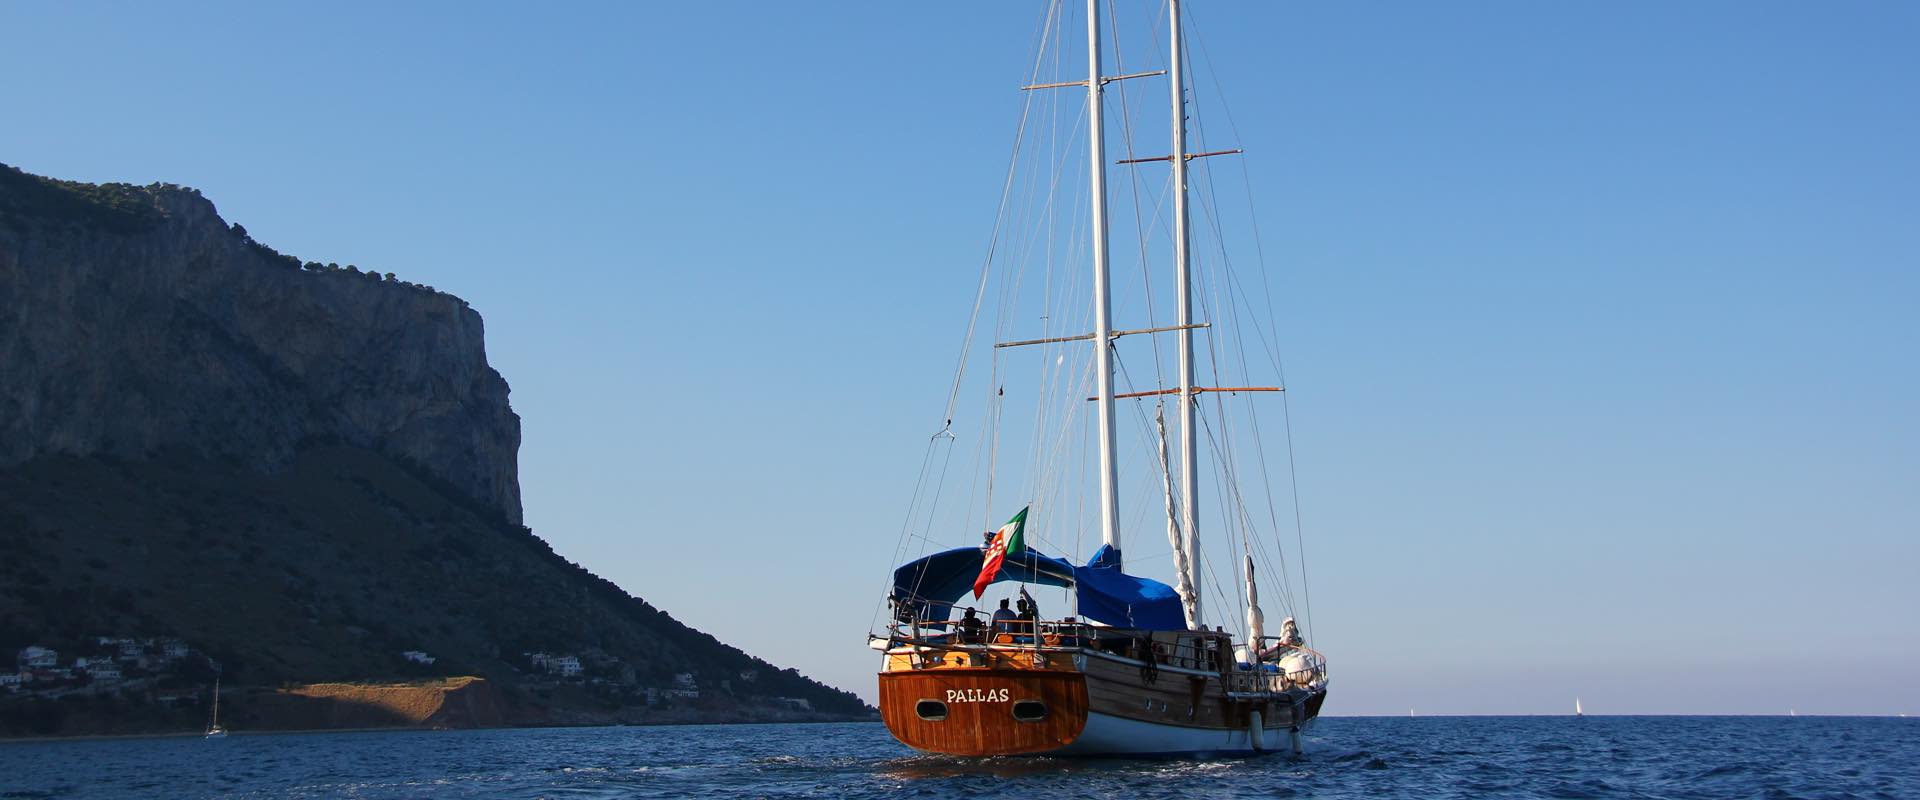 Gulet - Superyacht charter Sicily & Boat hire in Italy Sicily Aeolian Islands Lipari Lipari 2